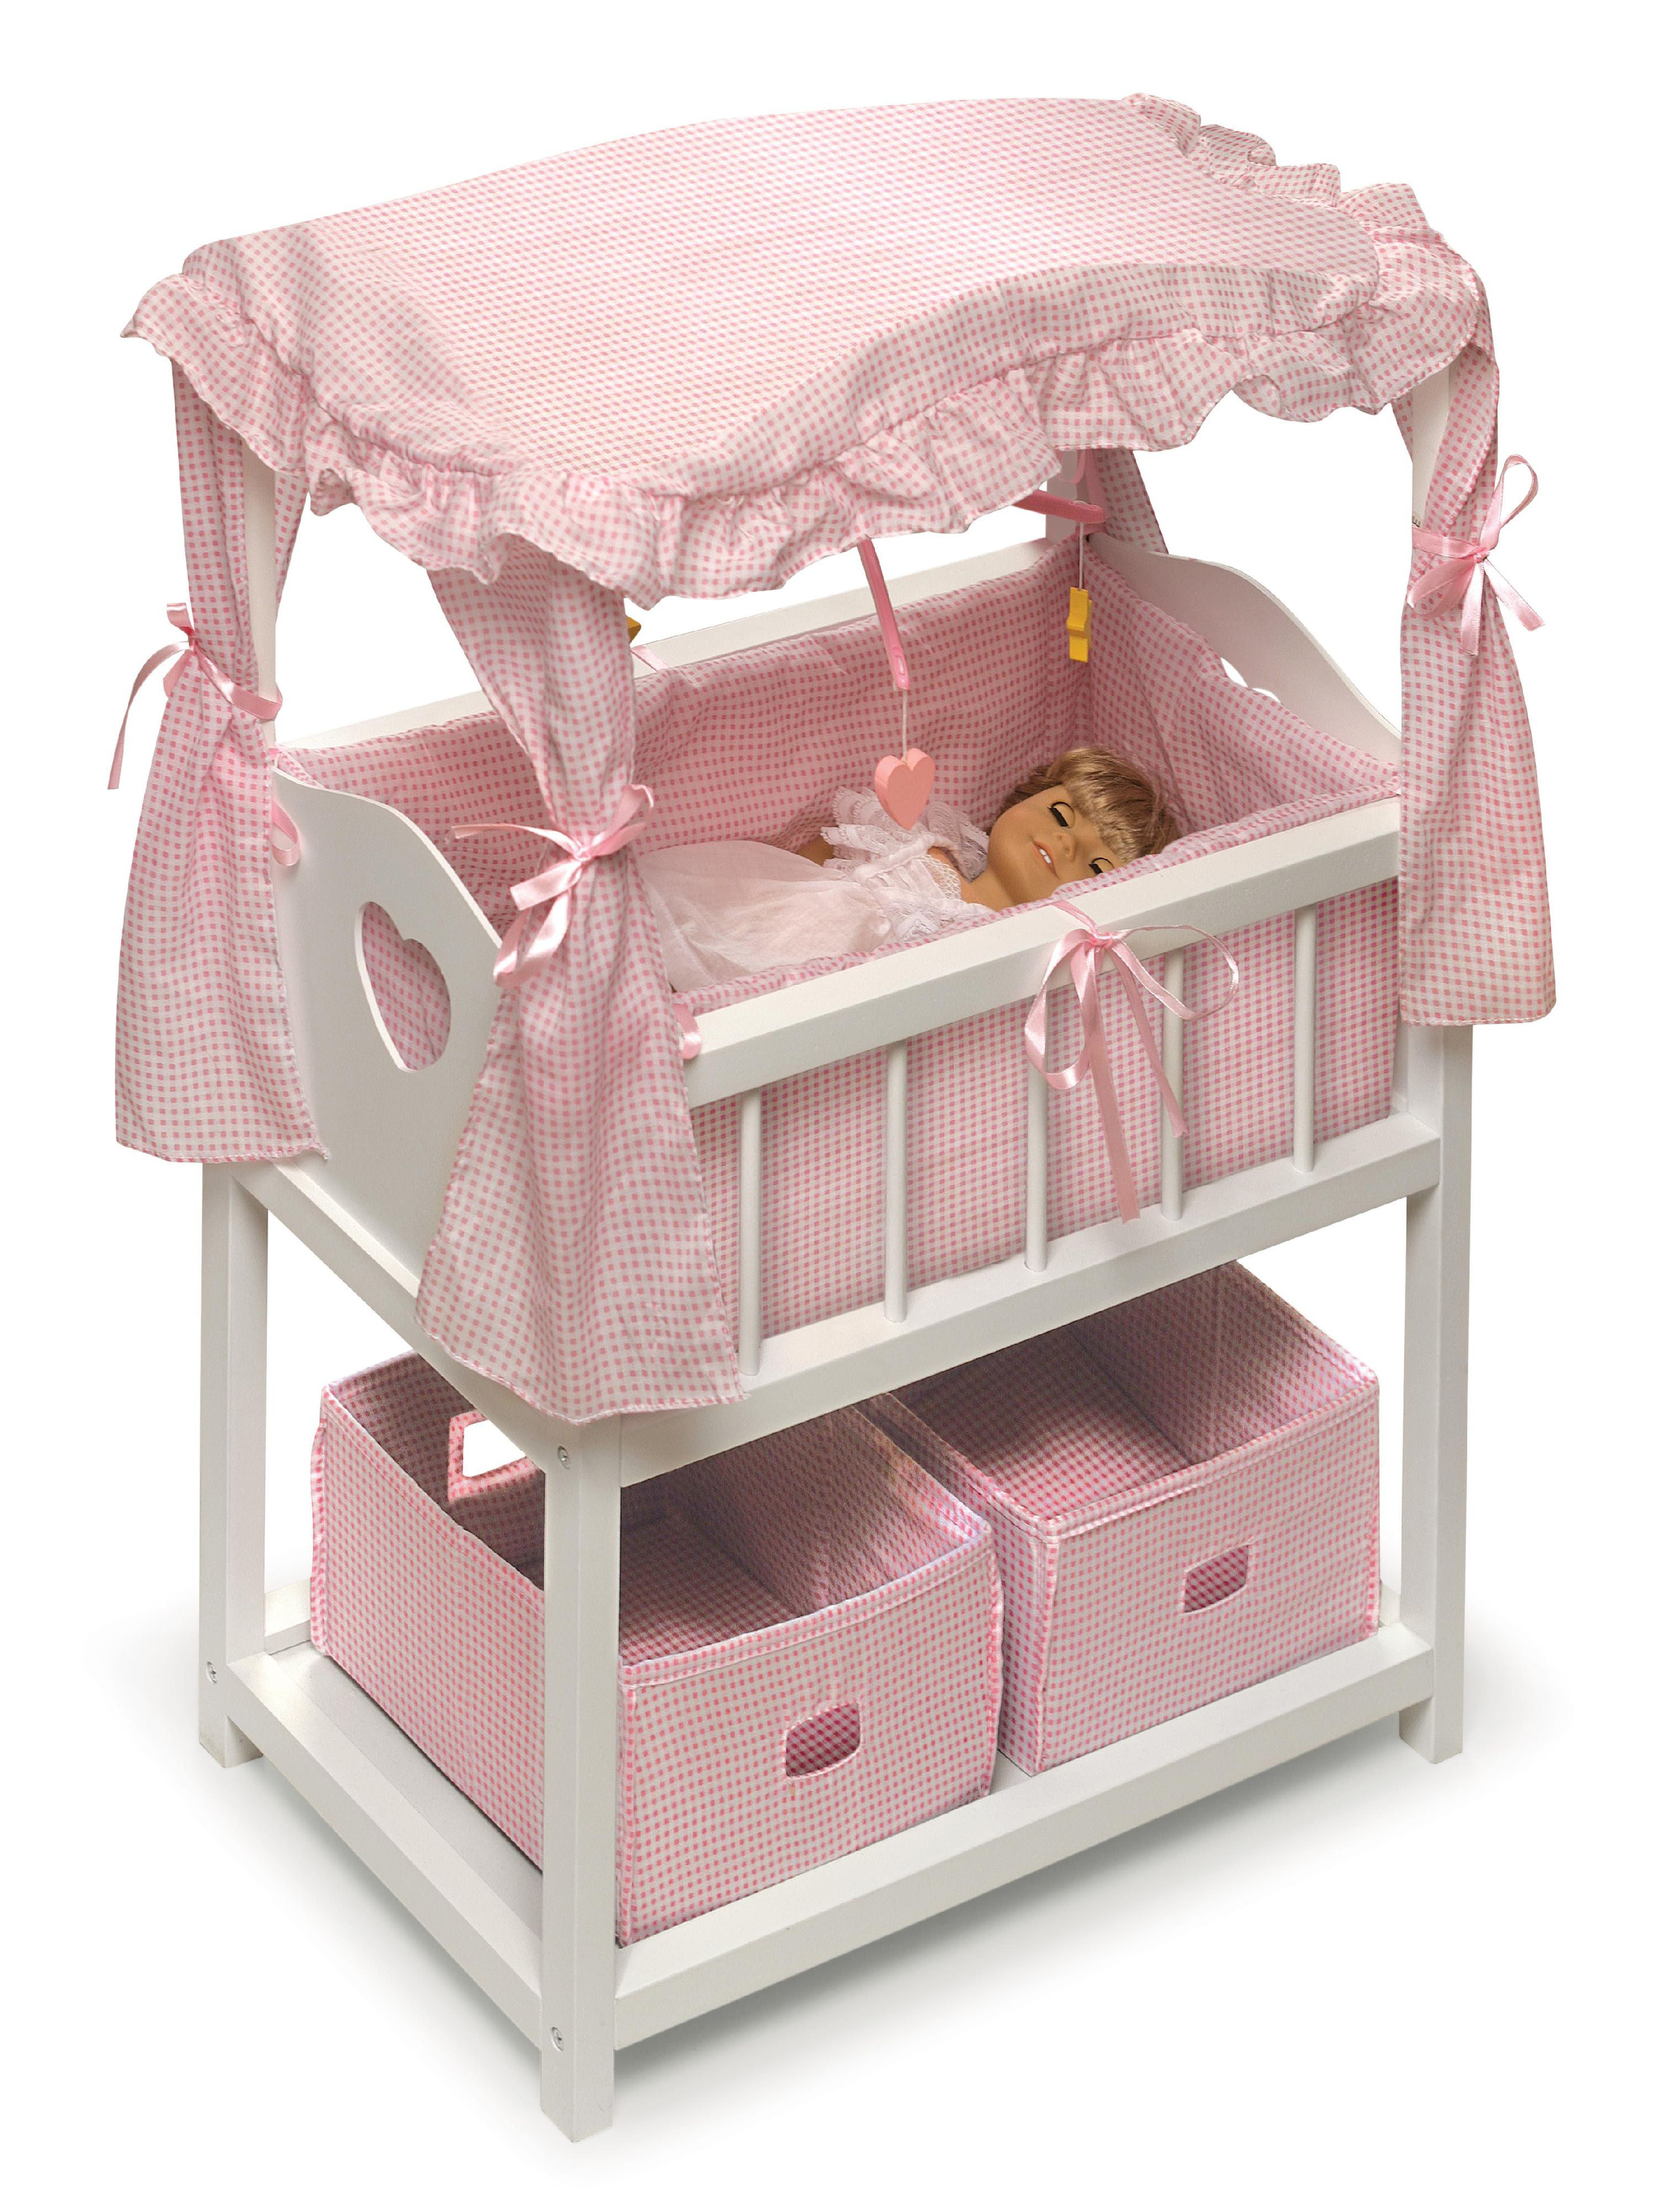 baby doll beds at walmart